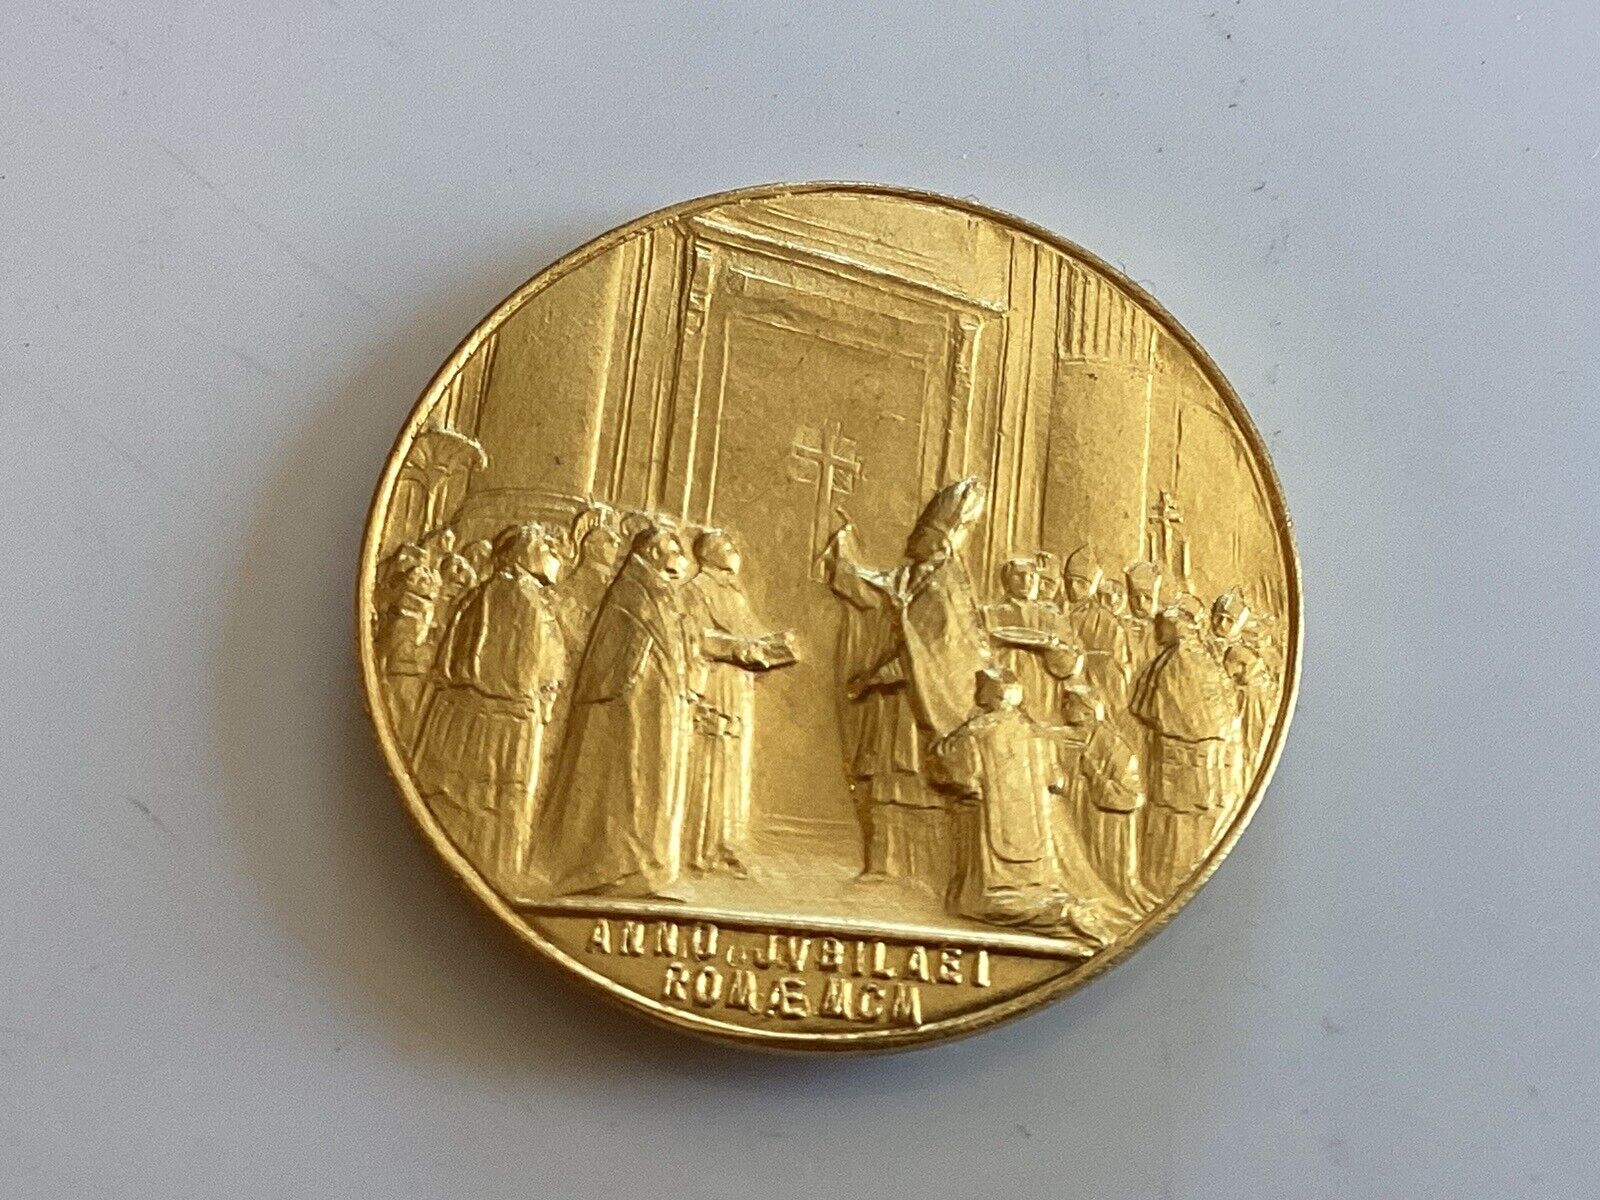 Pope Leo XIII Pont Max Anno JVBILAEI Rome MCM (1900) Gold Tone Medal